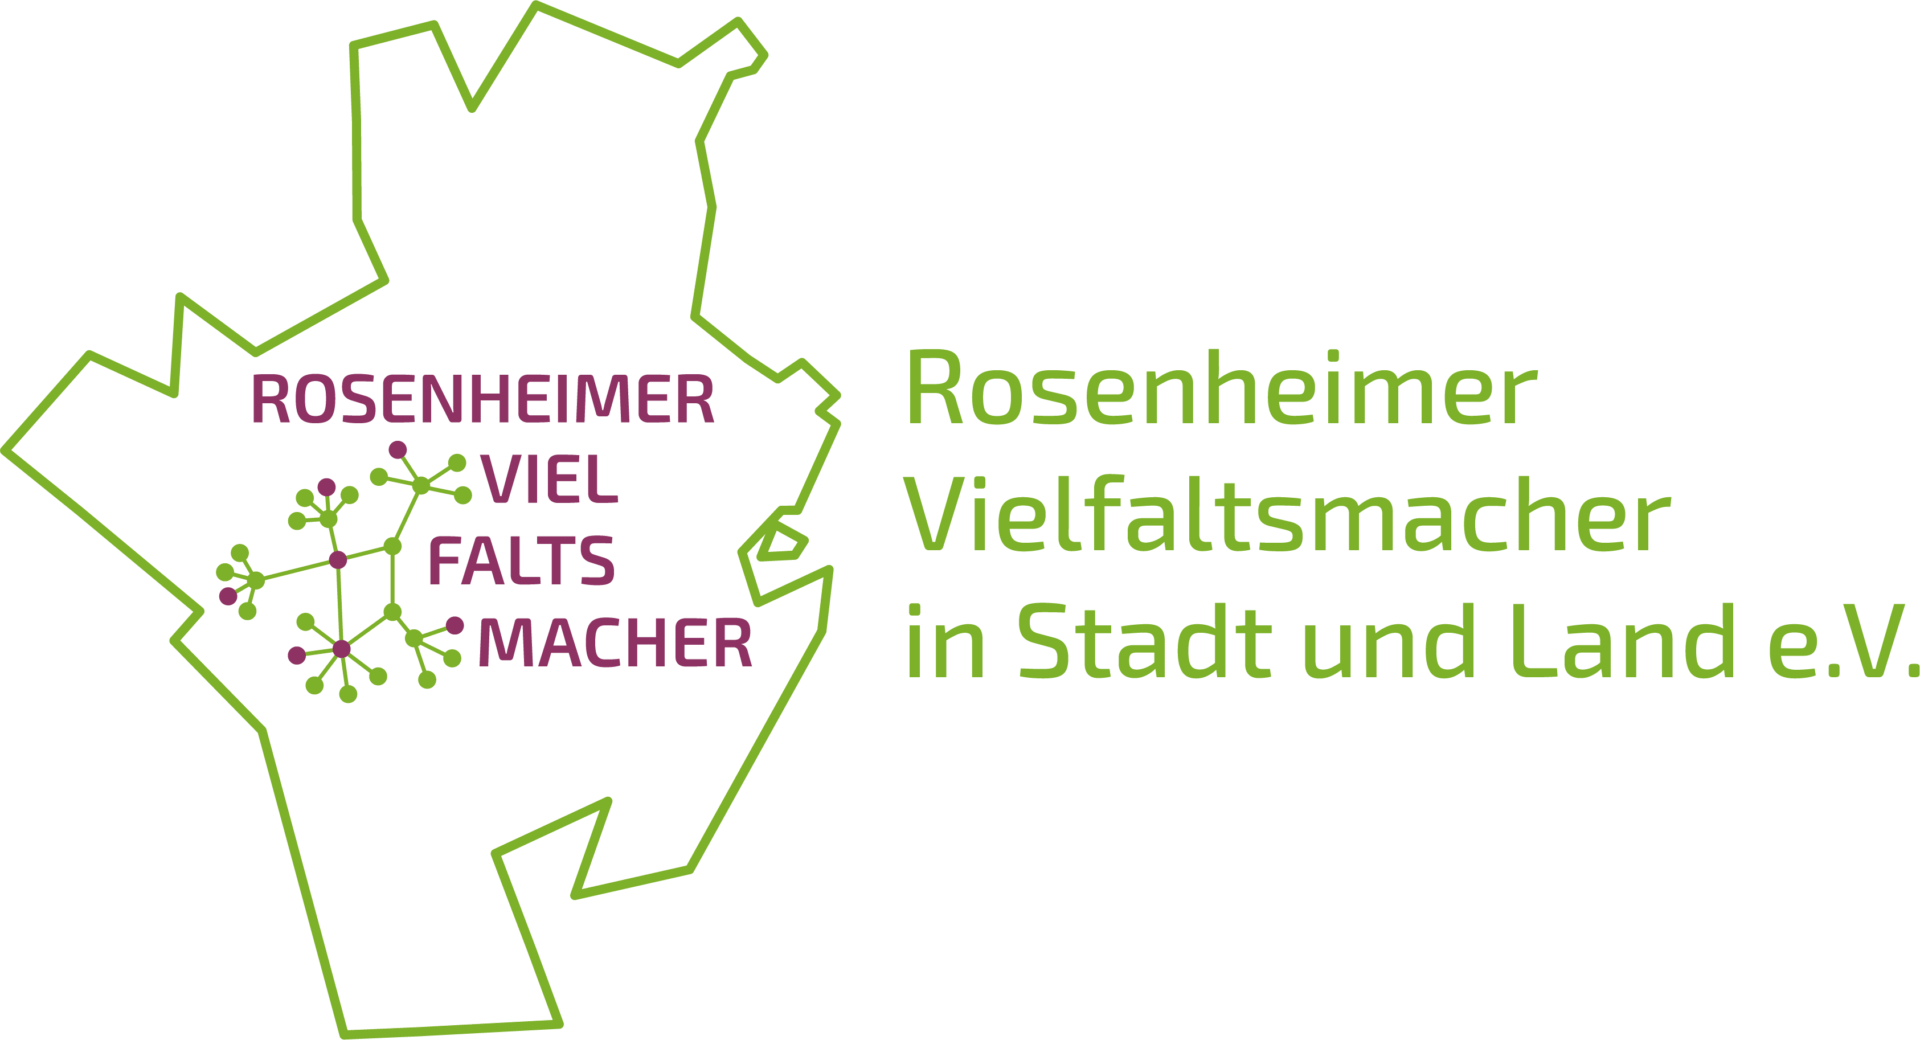 Rosenheimer Vielfaltsmacher in Stadt und Land e.V.